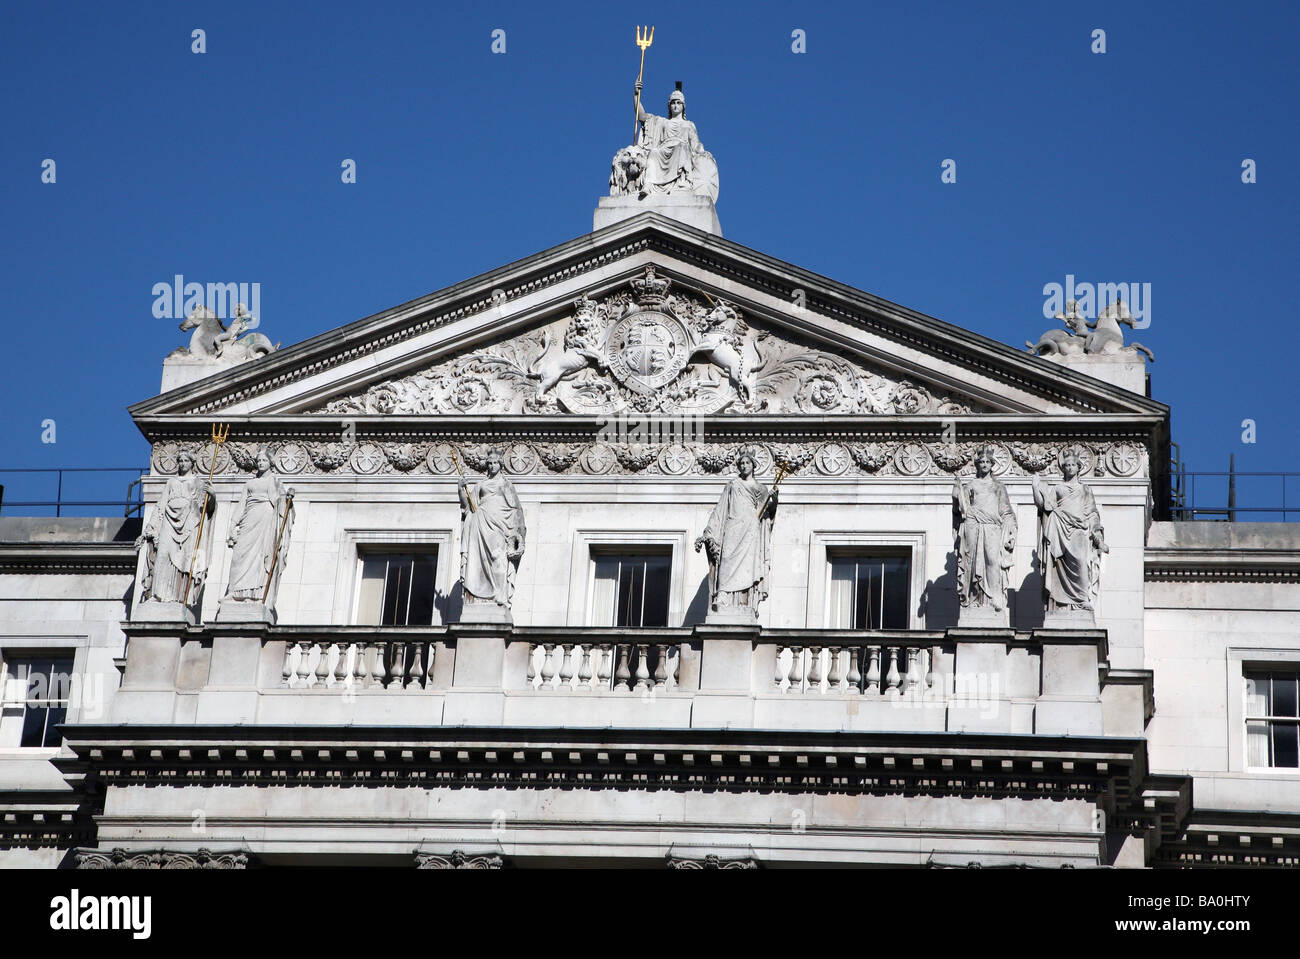 Somerset House, London (Detail Stockfotografie - Alamy